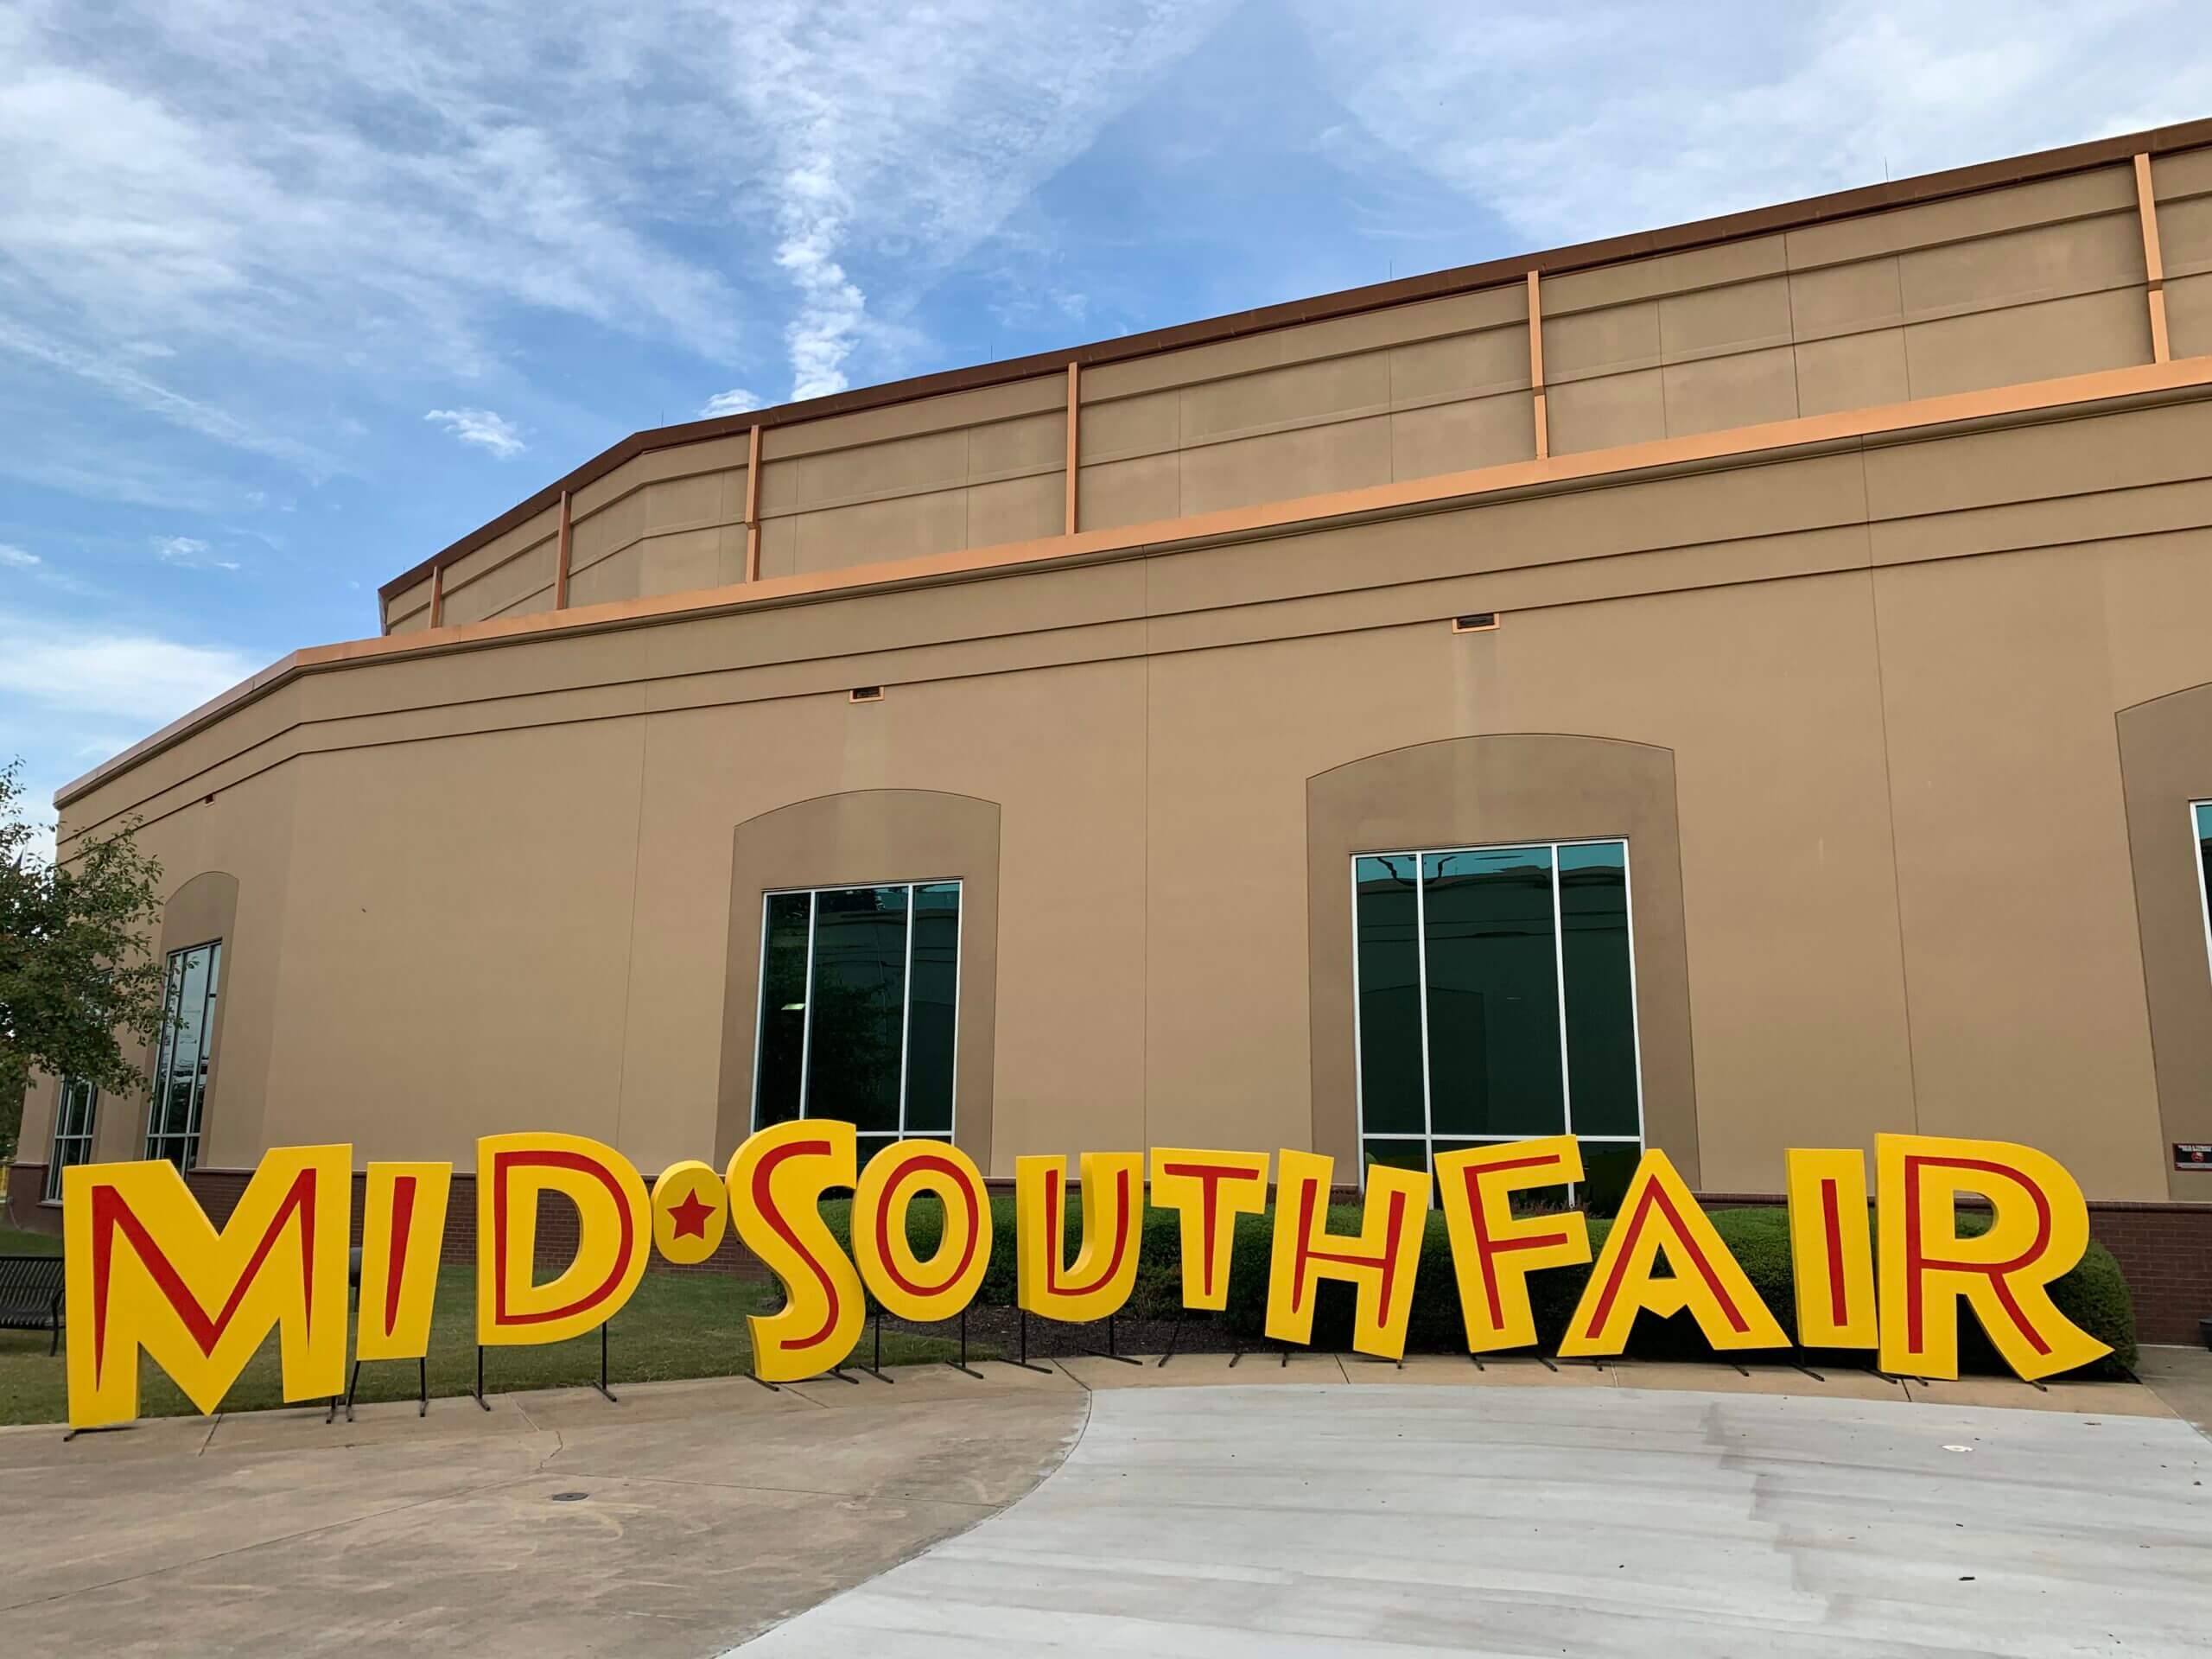 Mid-South Fair announces ticket offers